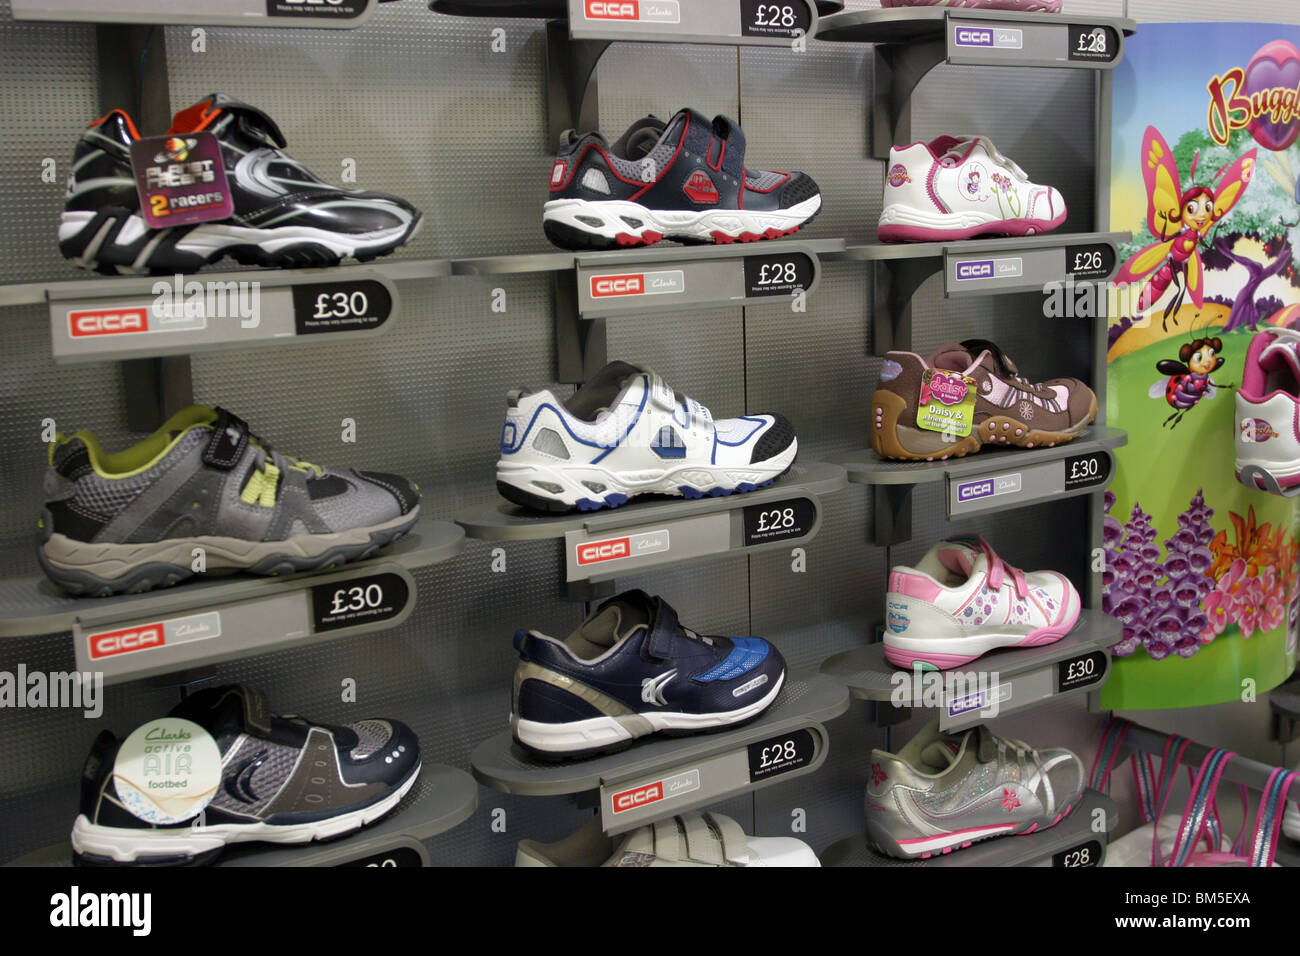 display in Clarks Shoe Shop Stock Photo 